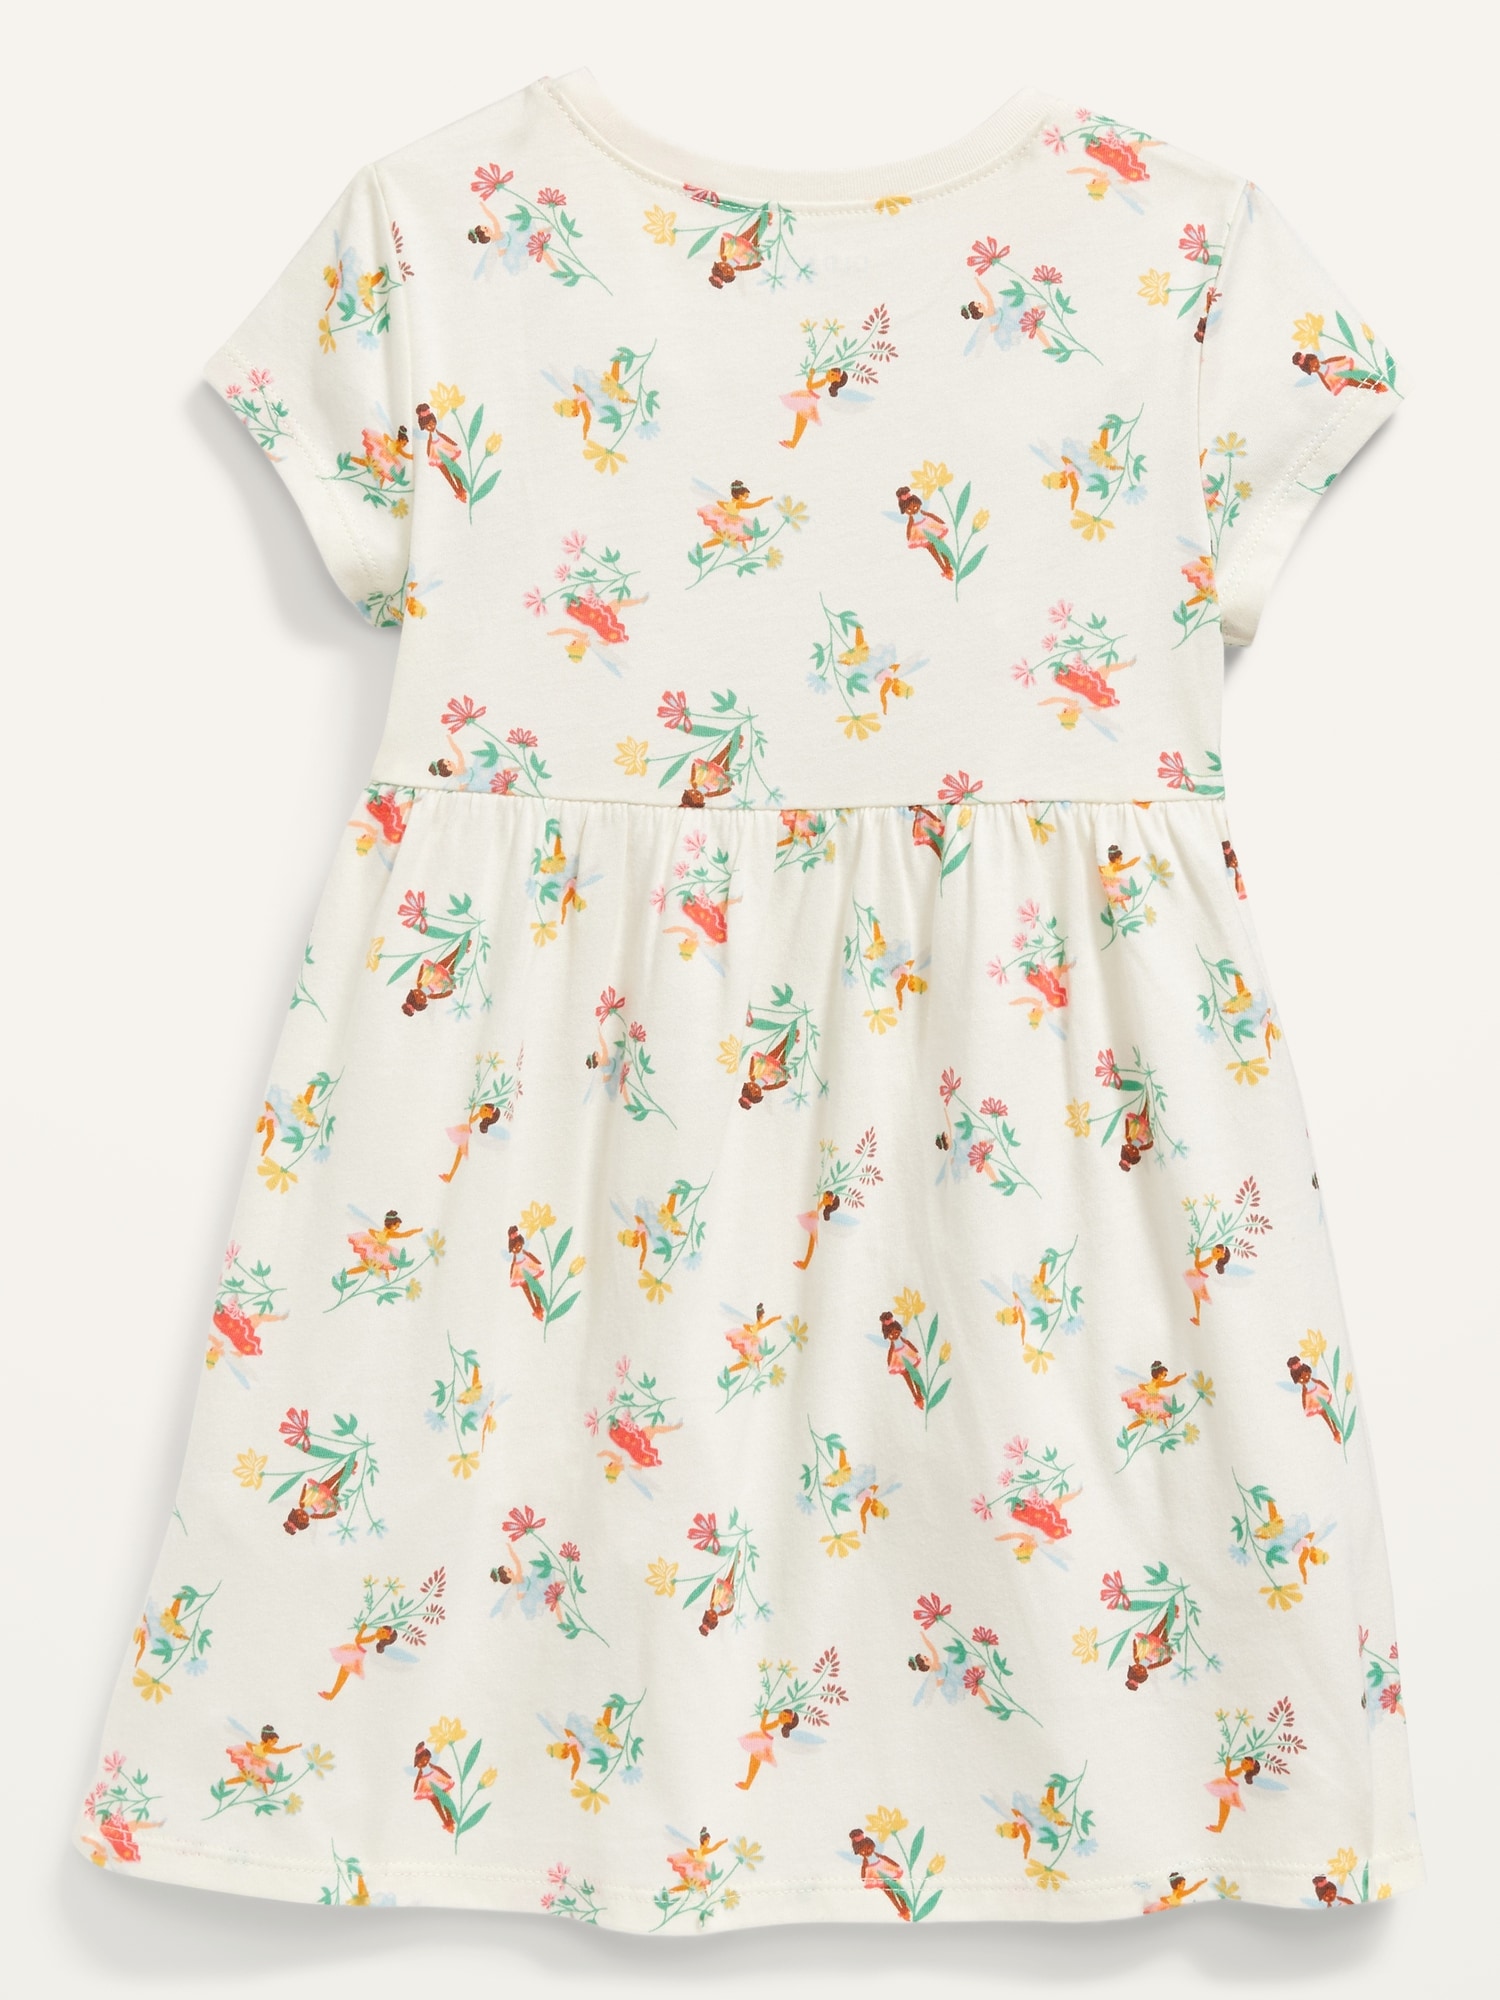 Jersey-Knit Short-Sleeve Dress for Toddler Girls